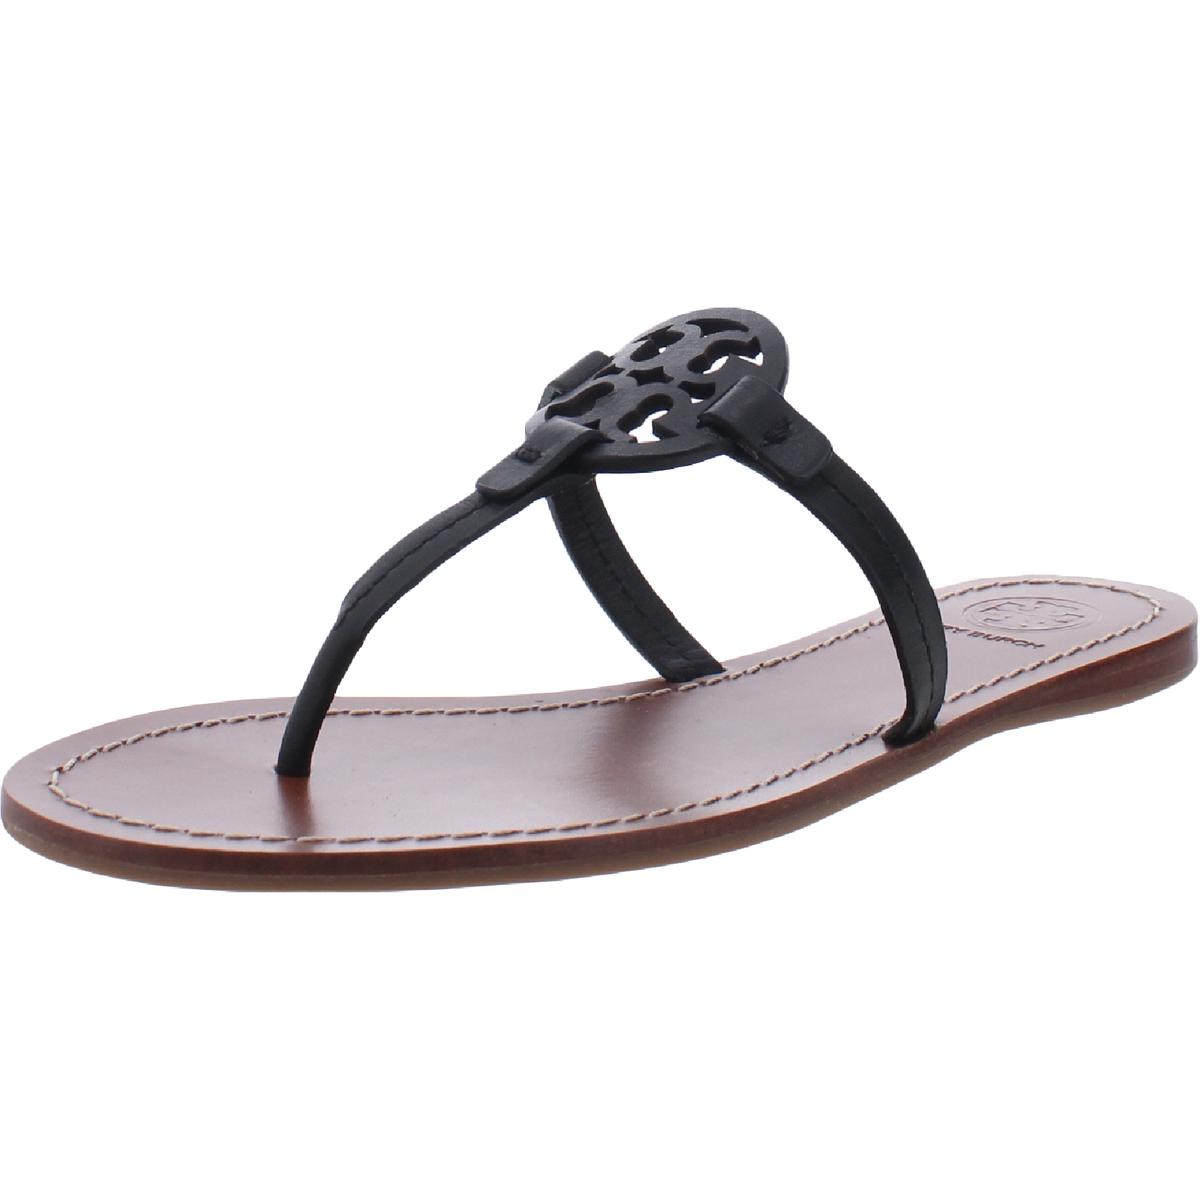 Tory Burch Womens Gabriel Vegan Leather Thong Flat Sandals Shoes BHFO 9544  | eBay